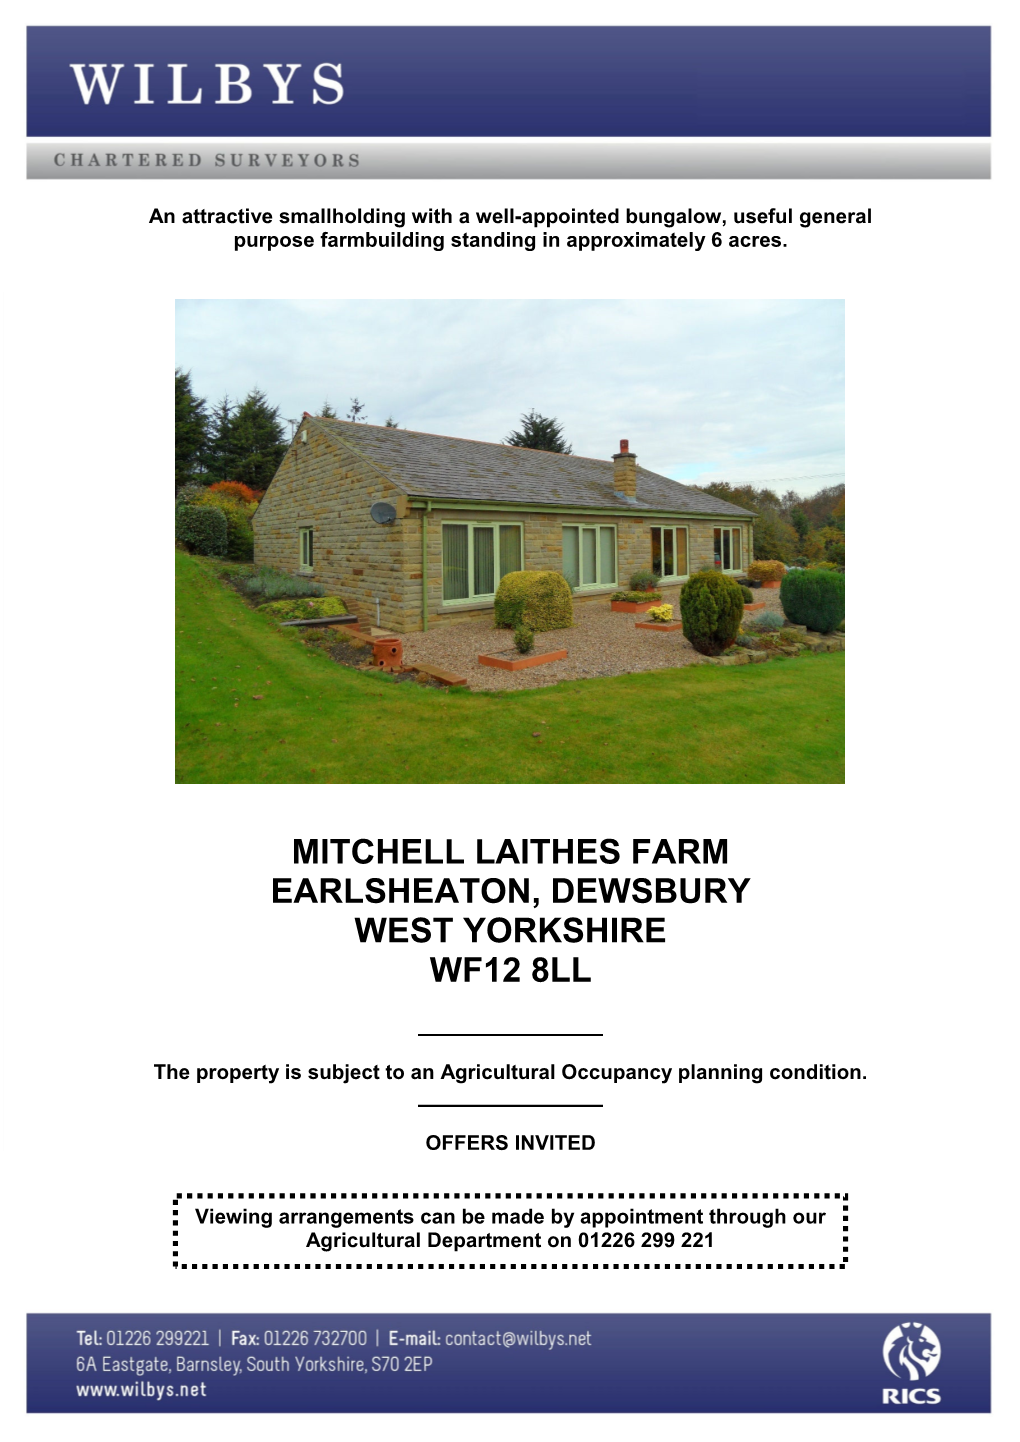 Mitchell Laithes Farm Earlsheaton, Dewsbury West Yorkshire Wf12 8Ll